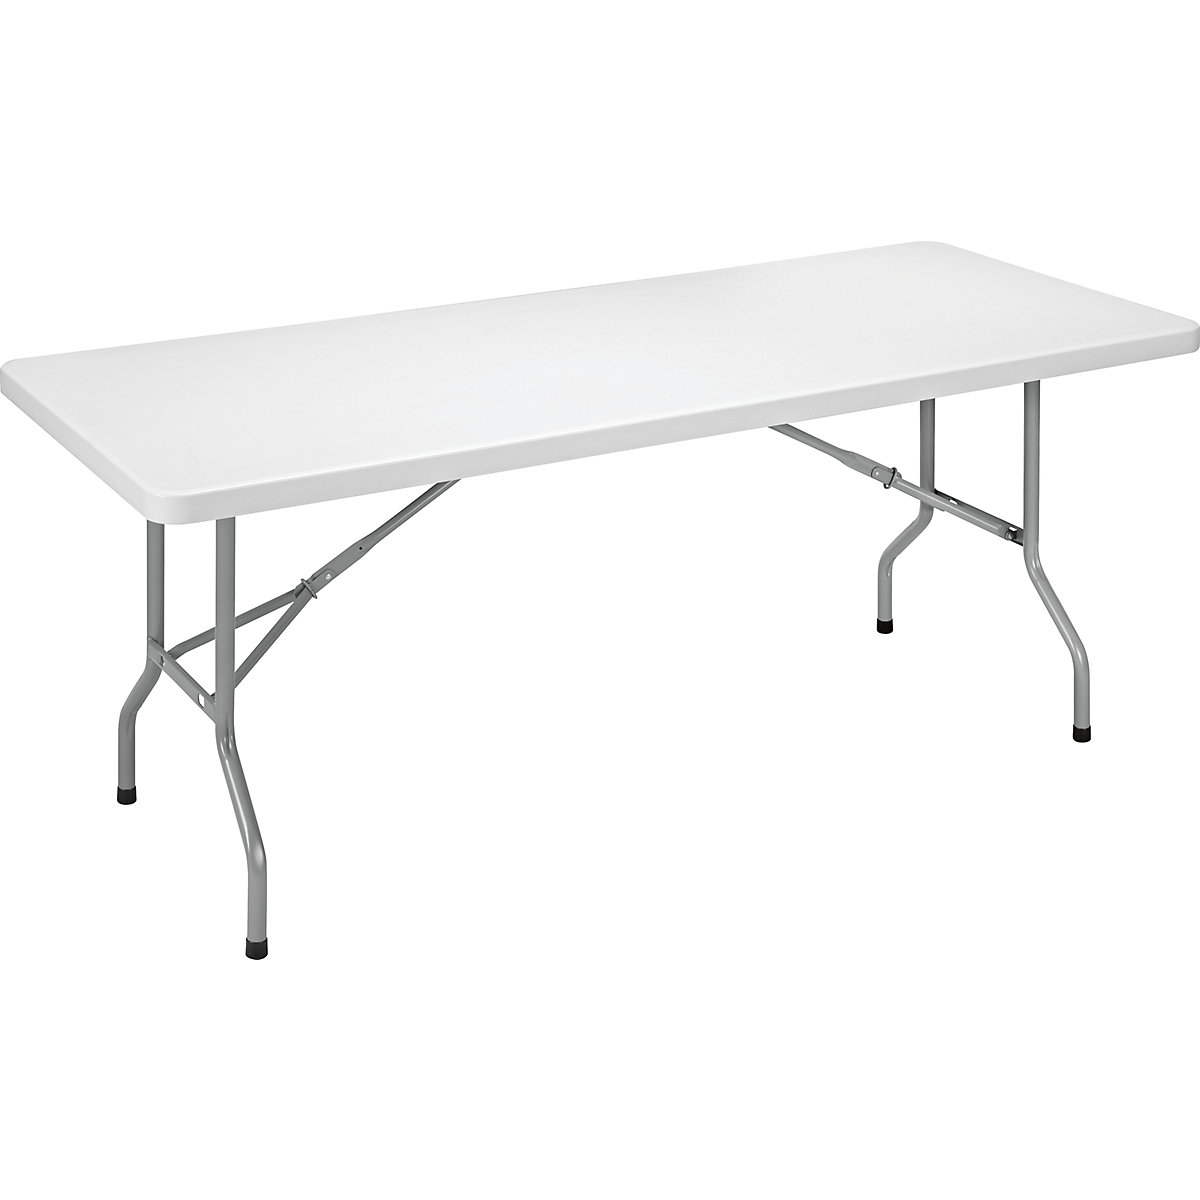 Petite table pliante plastique blanc